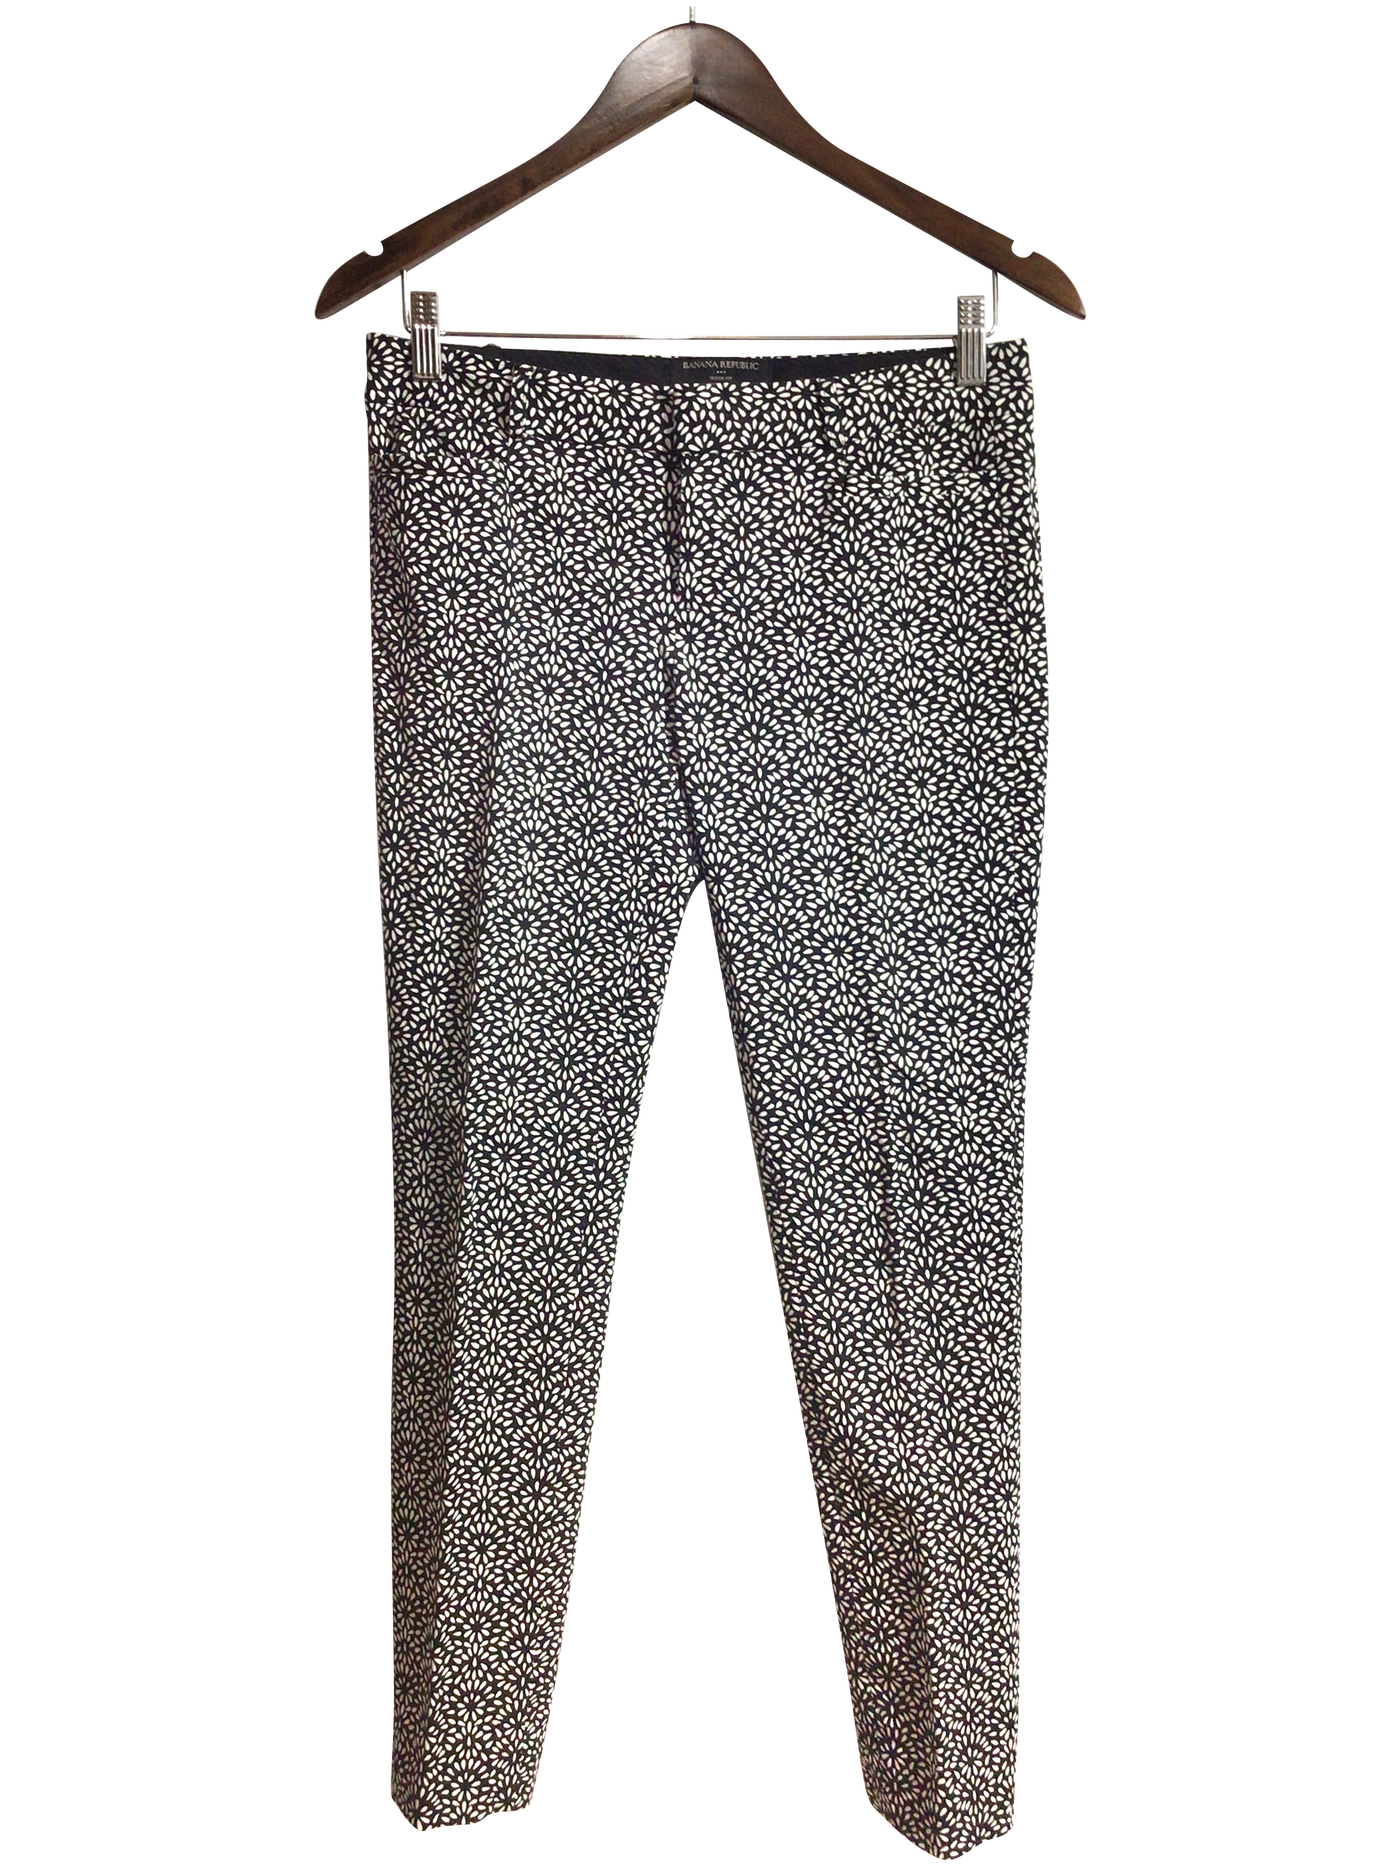 BANANA REPUBLIC Women Work Pants Regular fit in Black - Size 0 | 22.99 $ KOOP